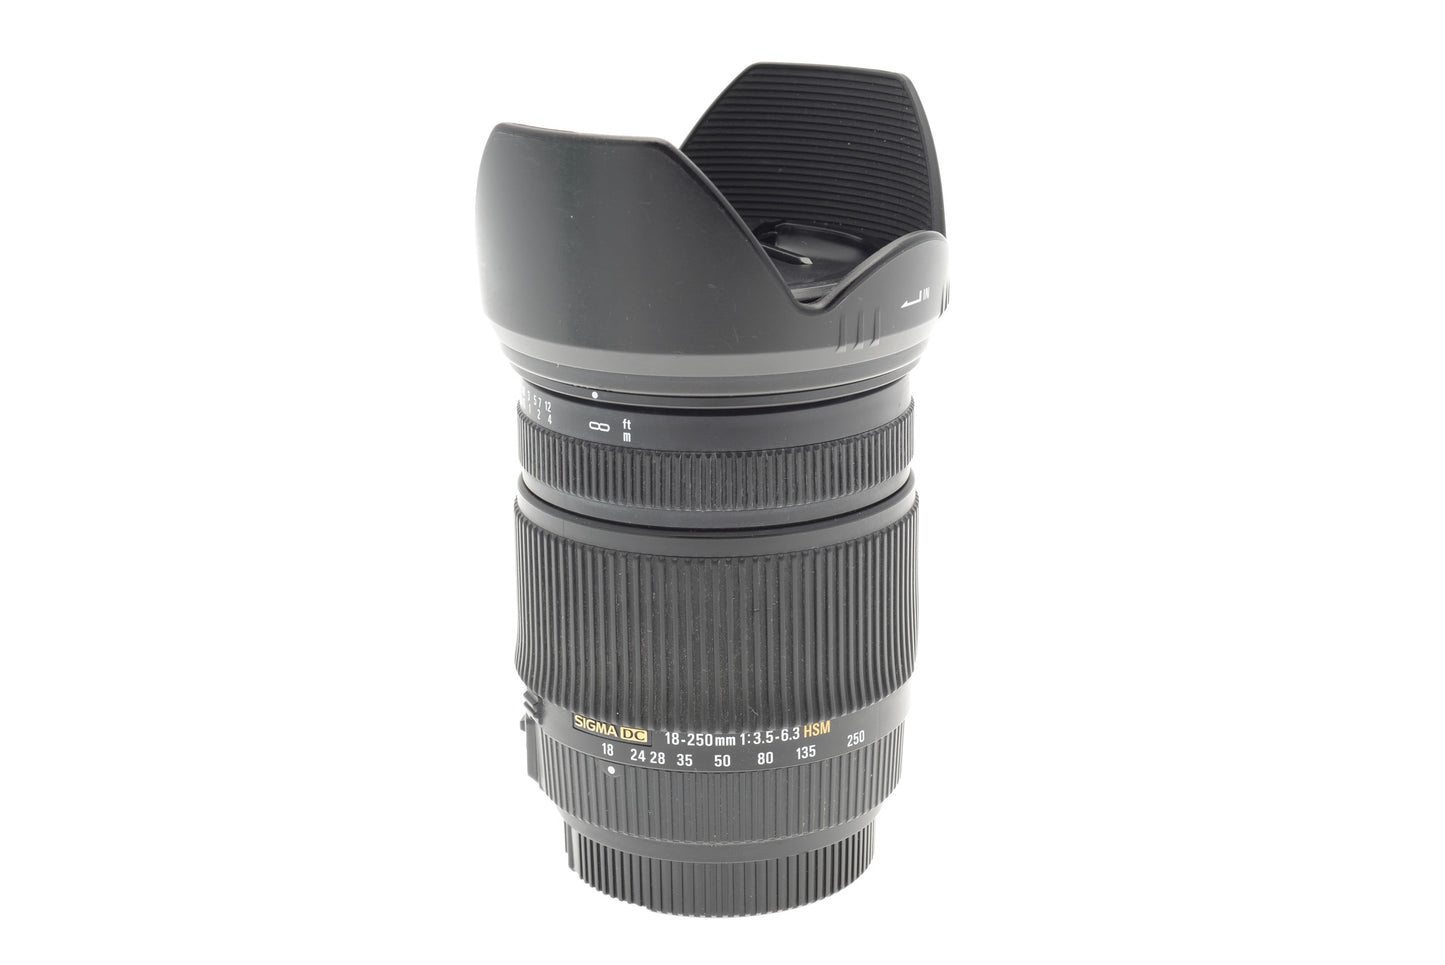 Sigma 18-200mm f3.5-6.3 DC OS HSM - Lens